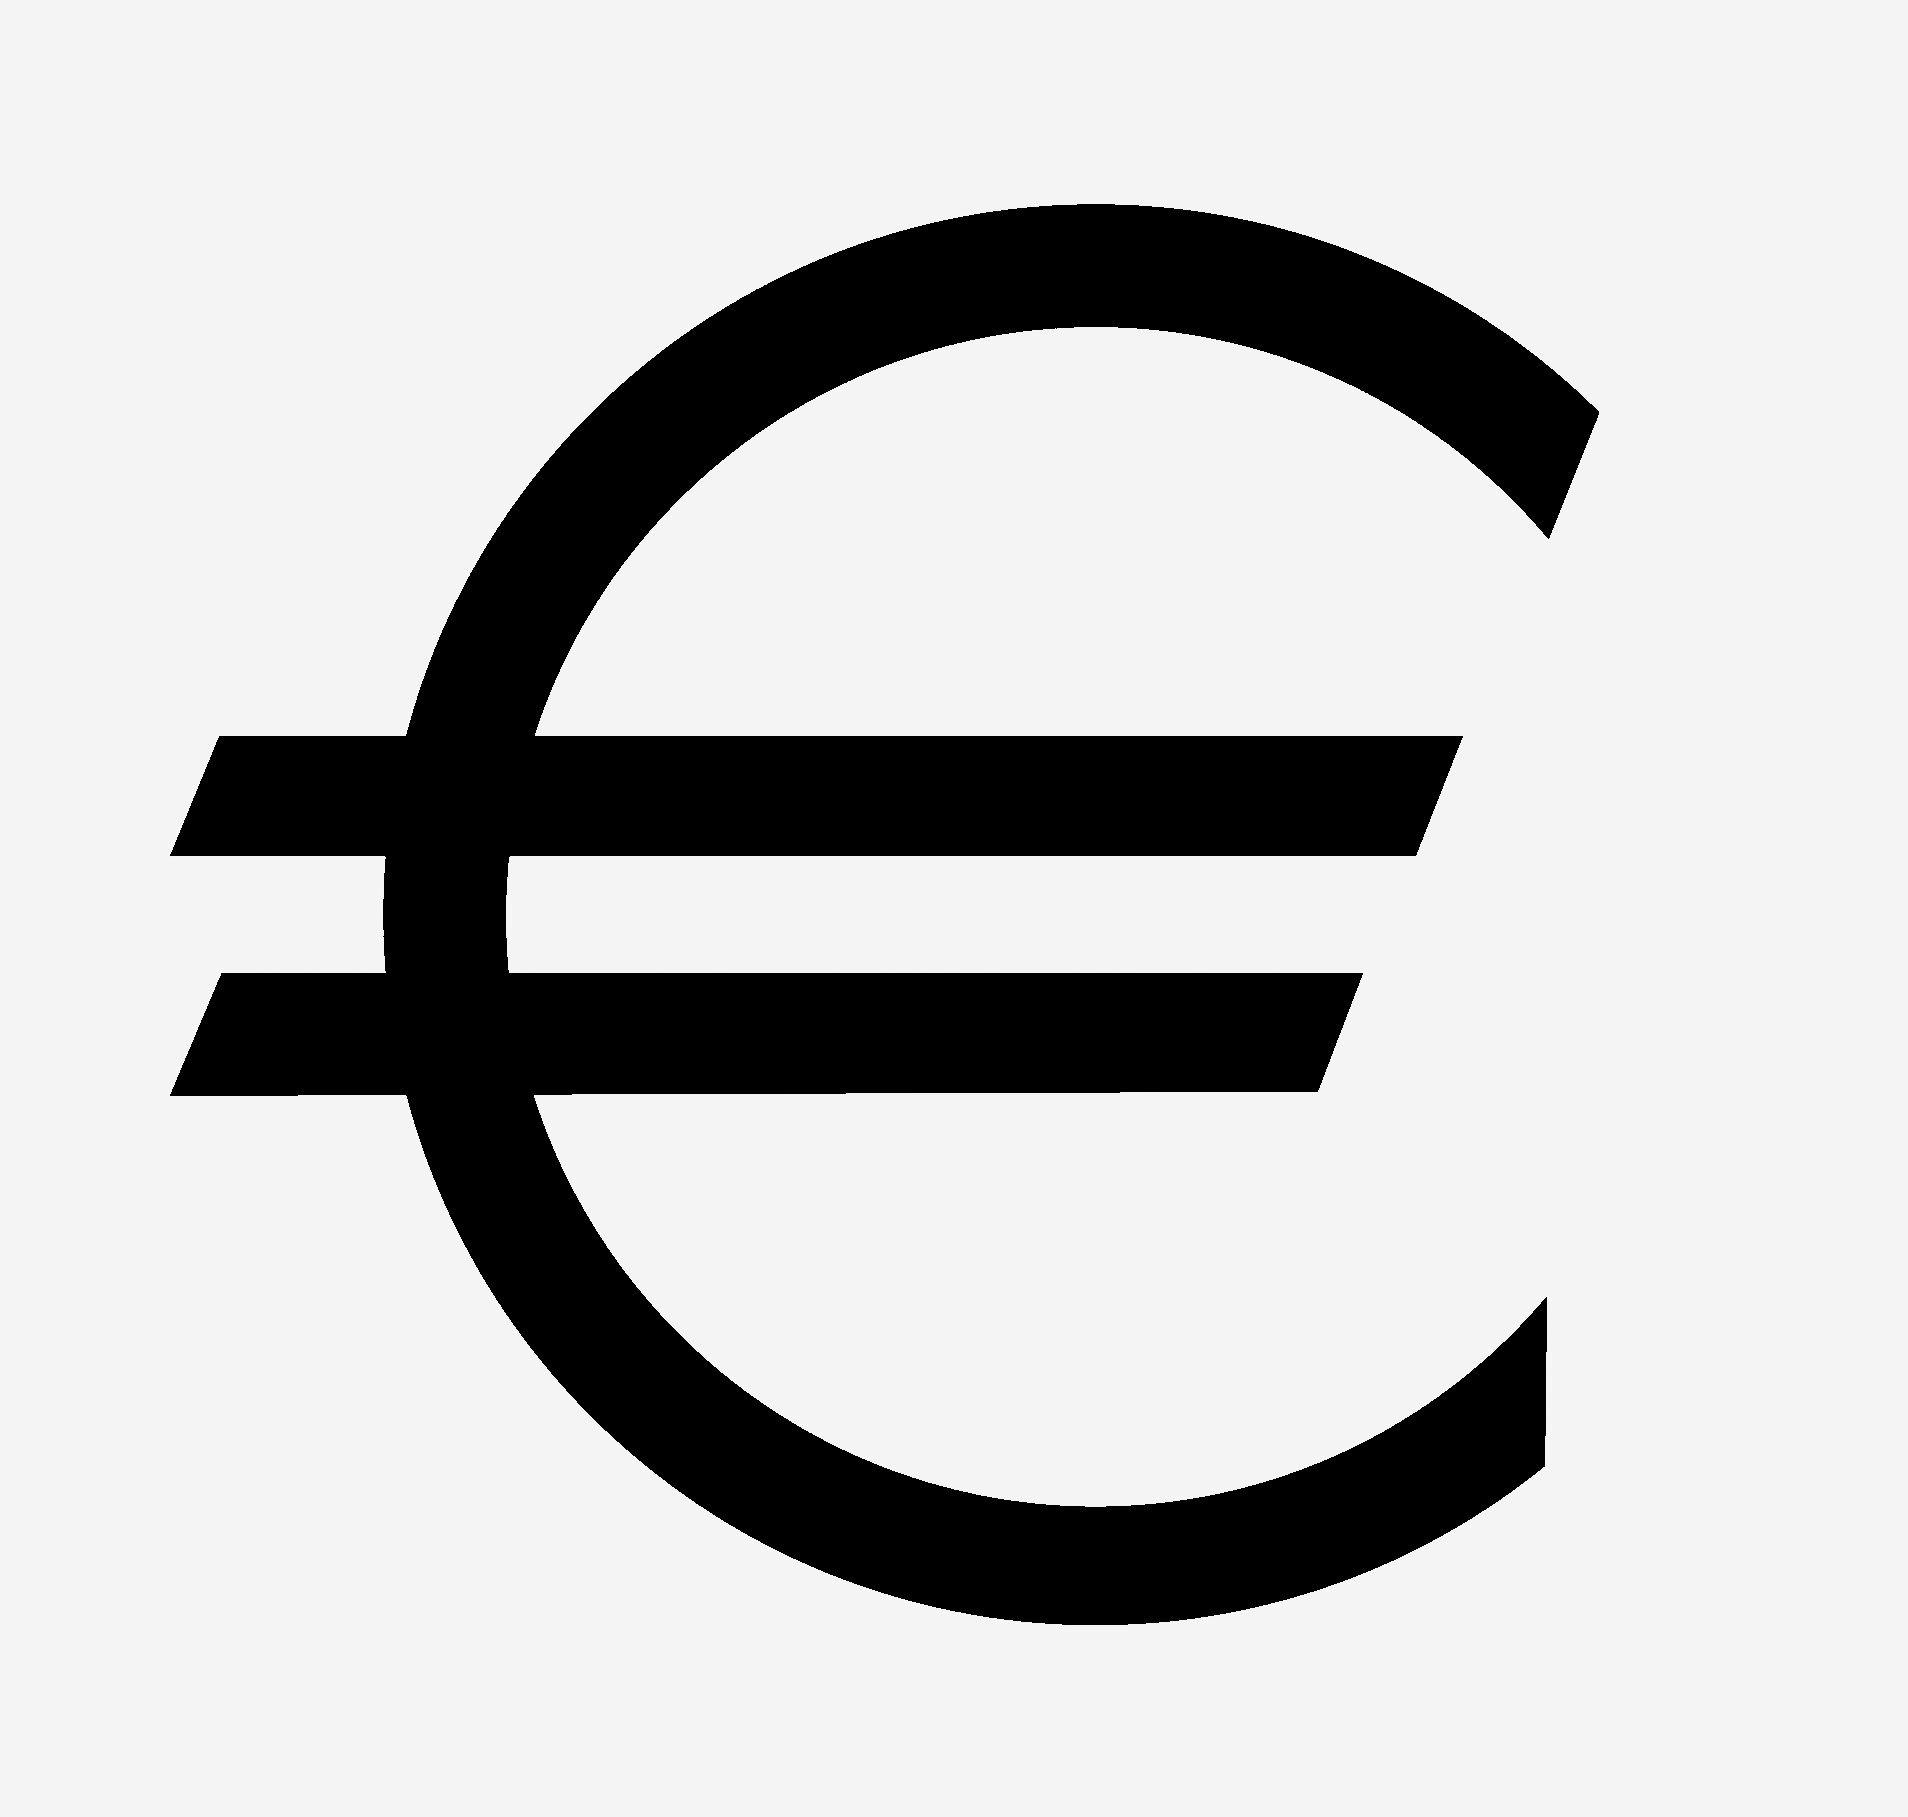 Euro Logo - Euro symbol official bitmap and vector image download